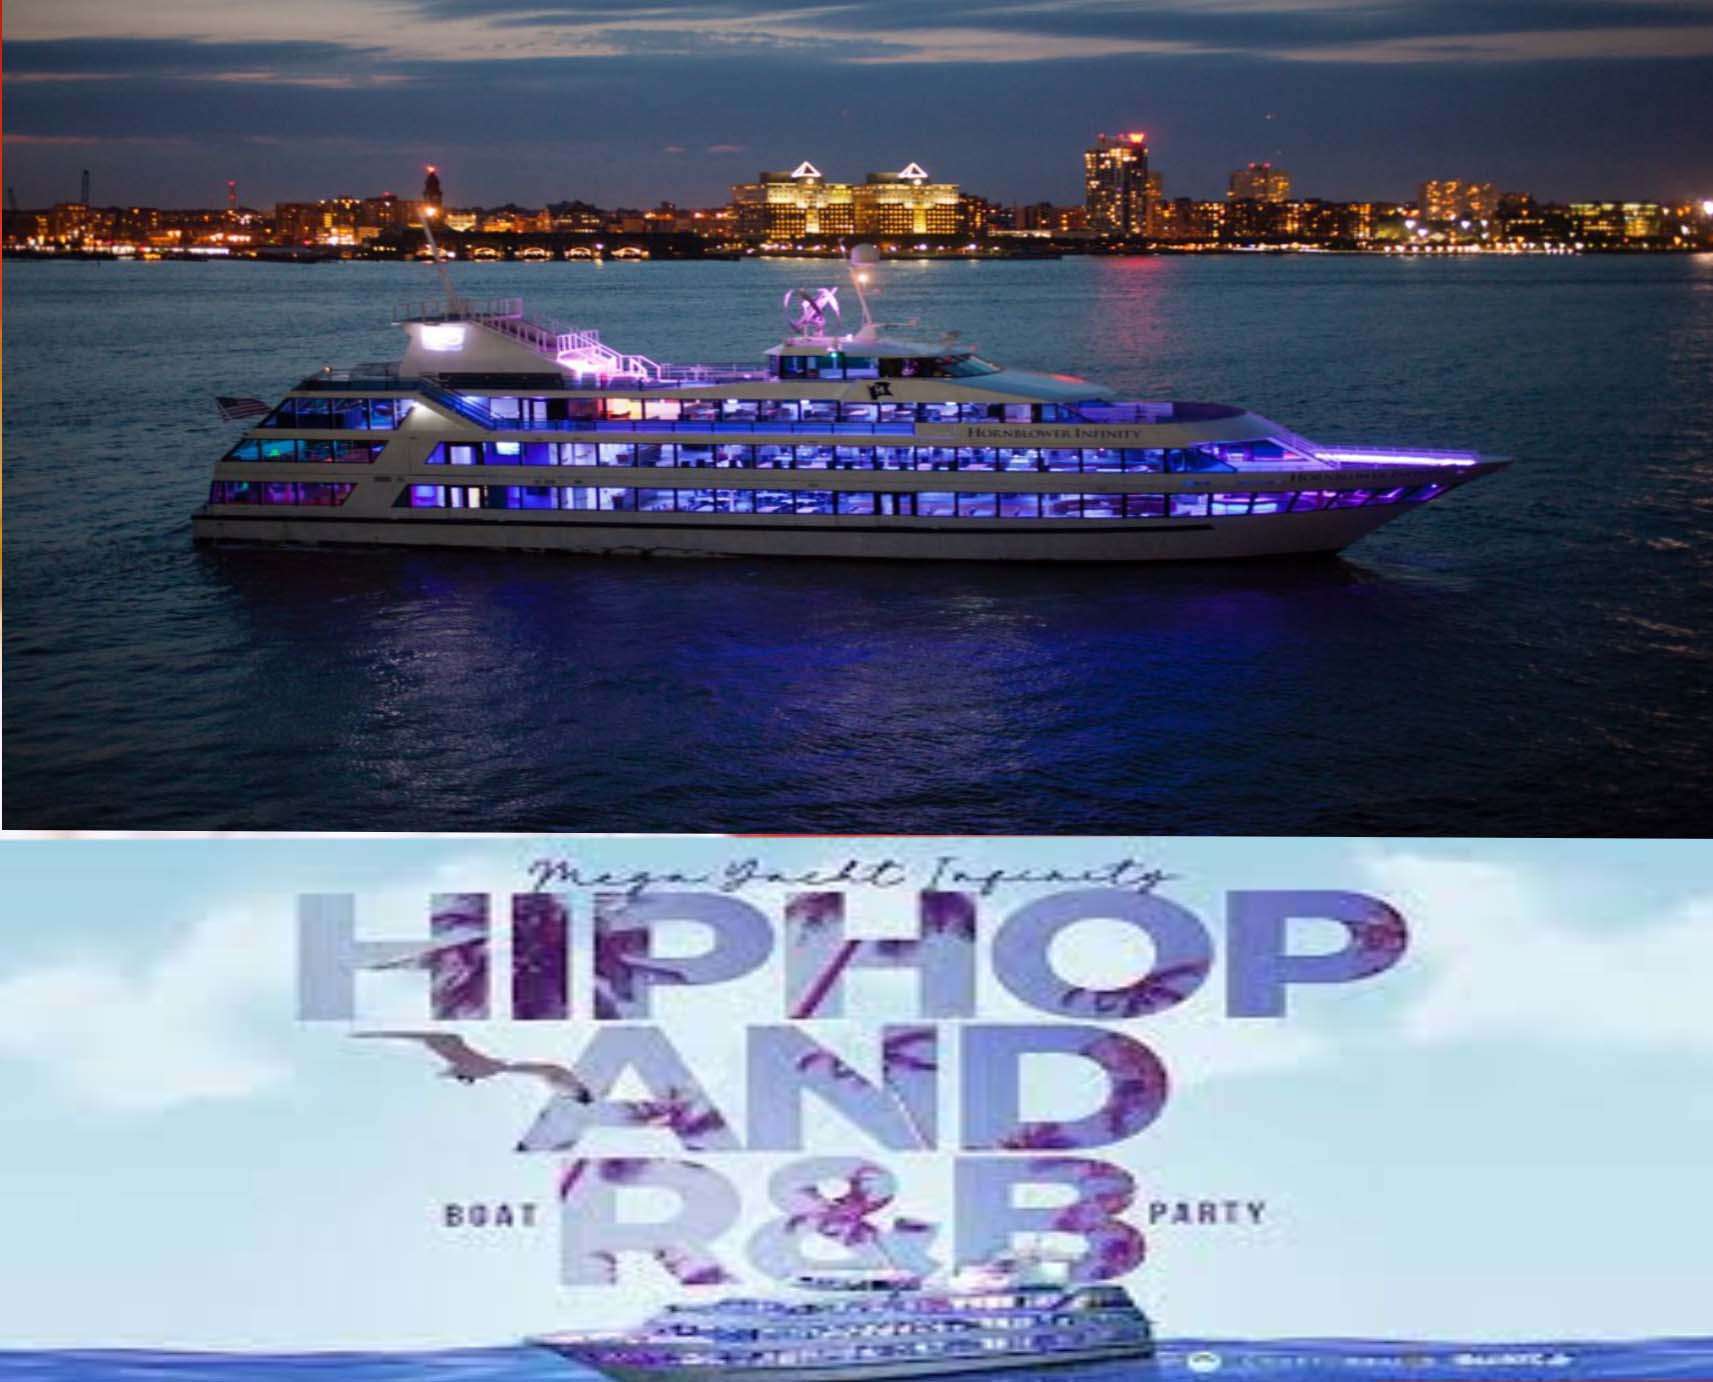 THE Hip Hop & R&B Boat Party NYC MEGA YACHT INFINITY